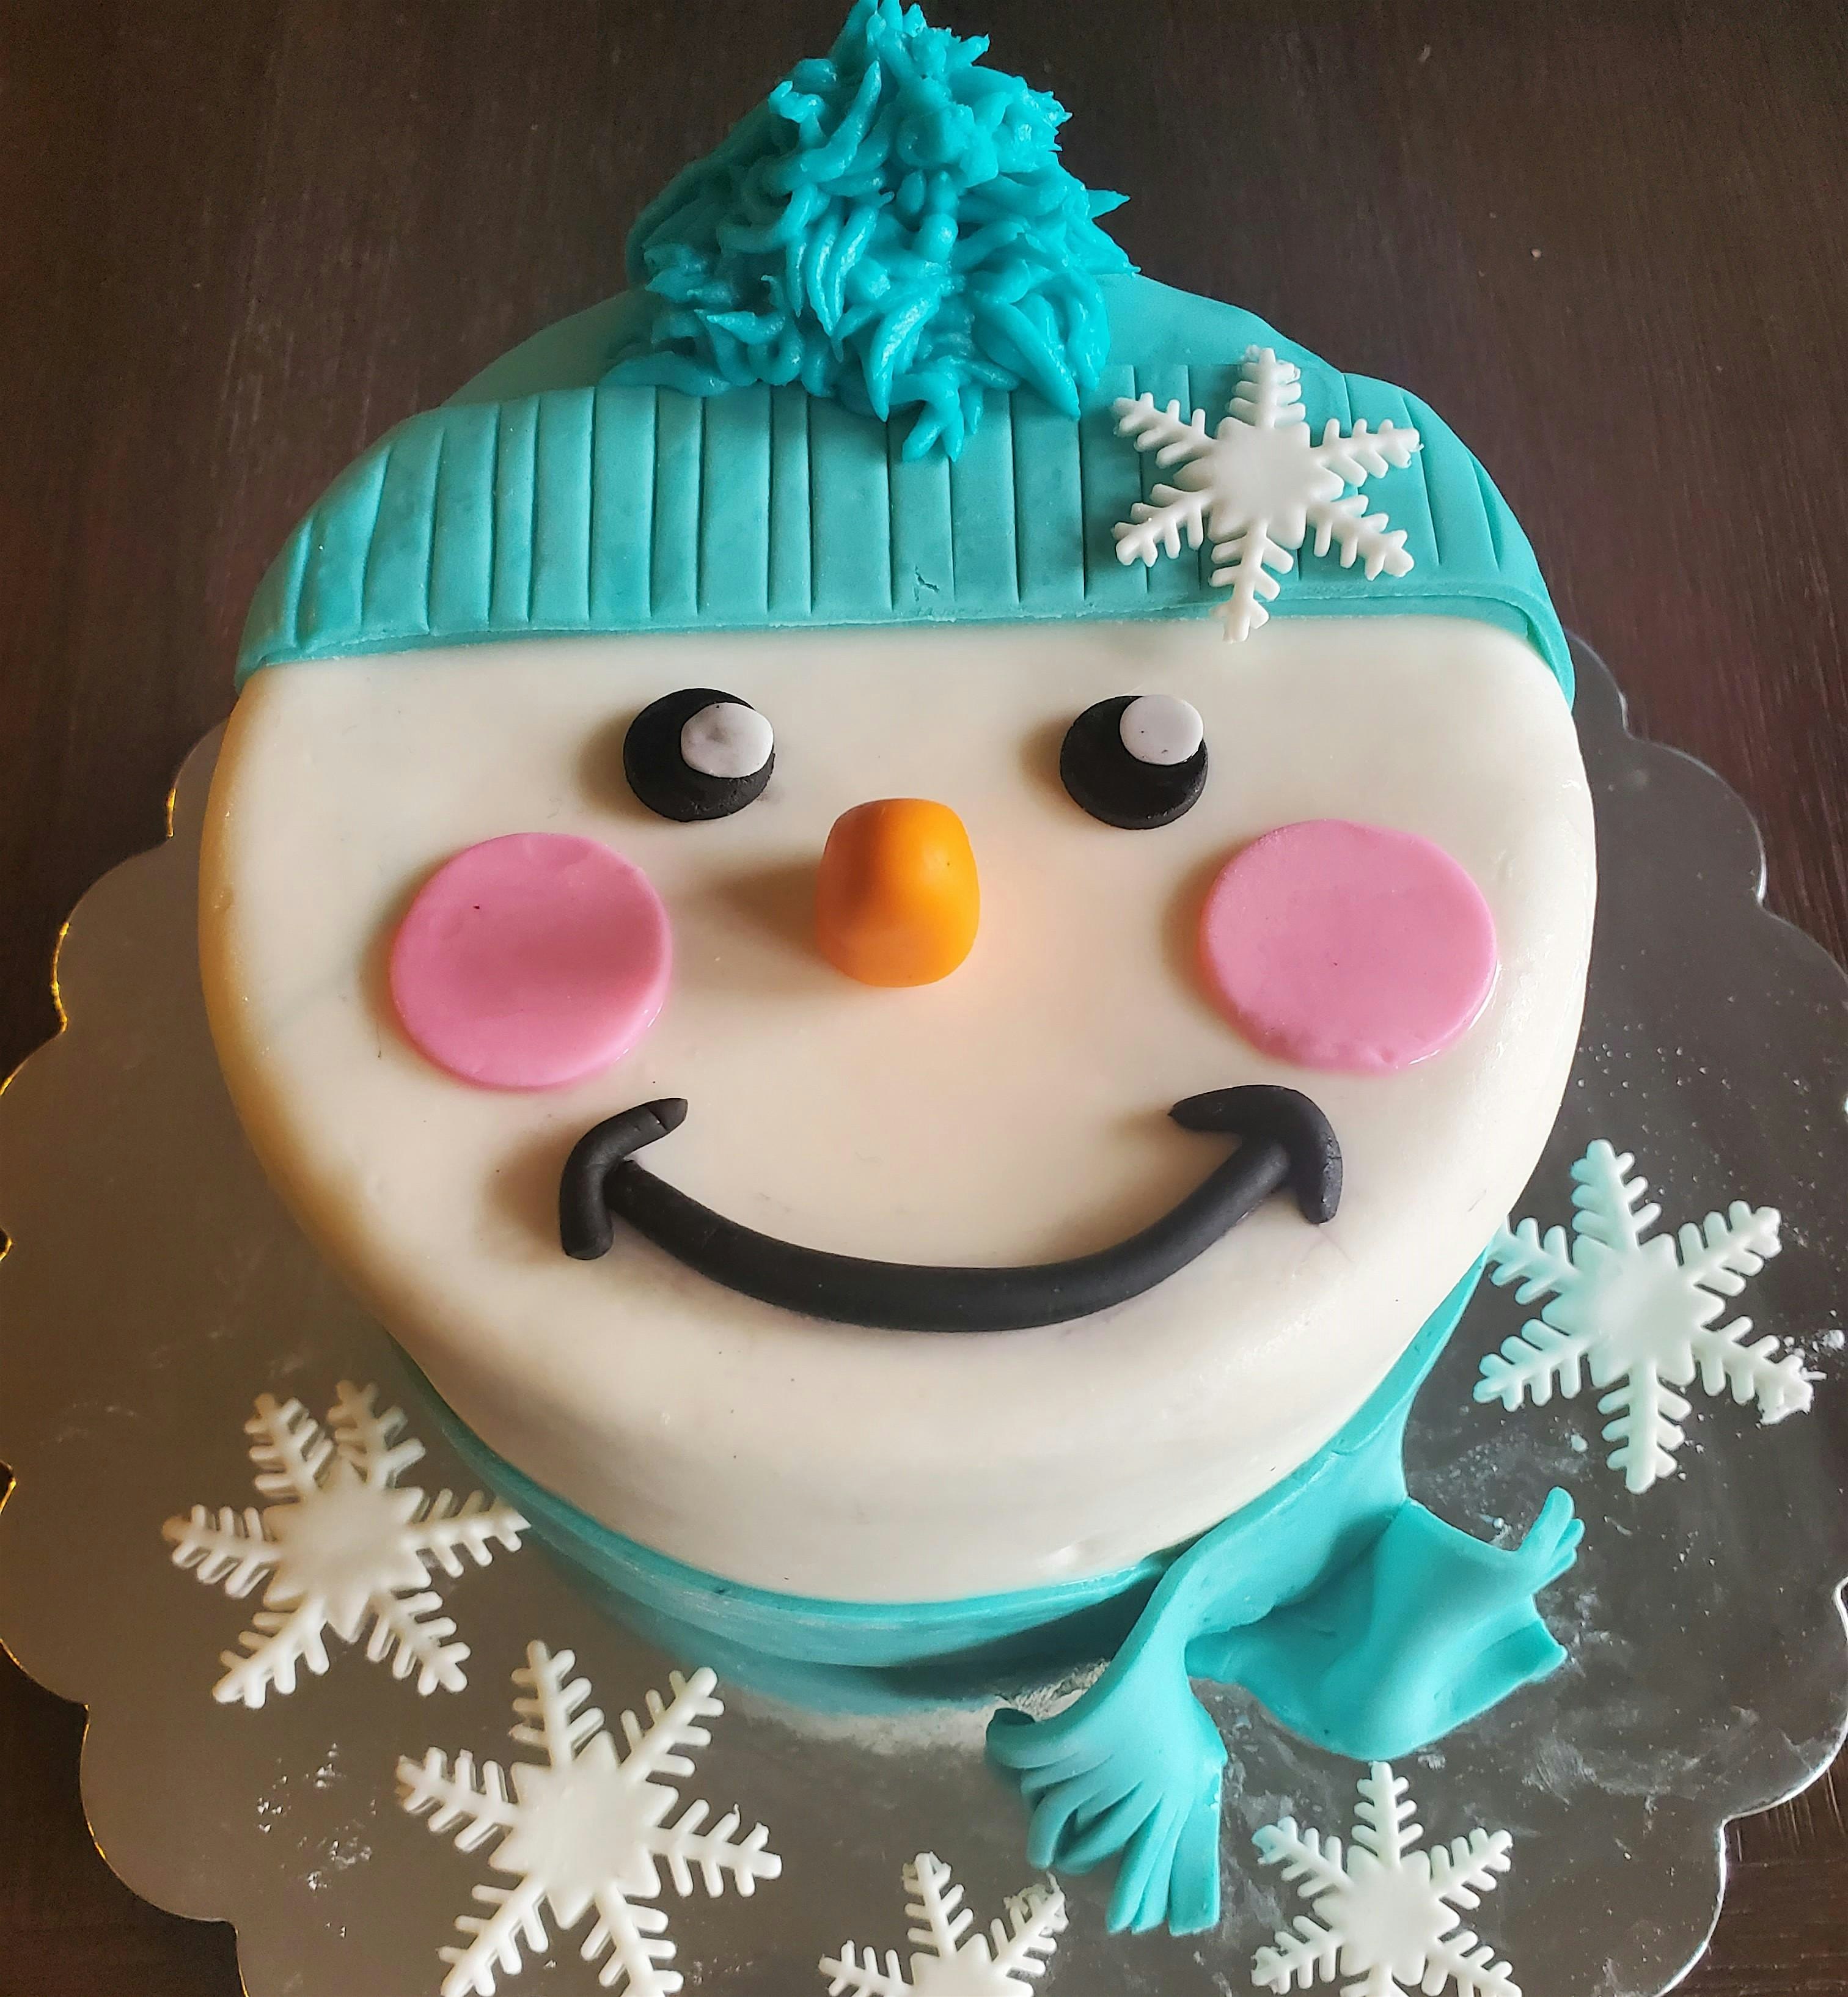 Tweens & Teens Snowman Cake Decorating Class with Fondant